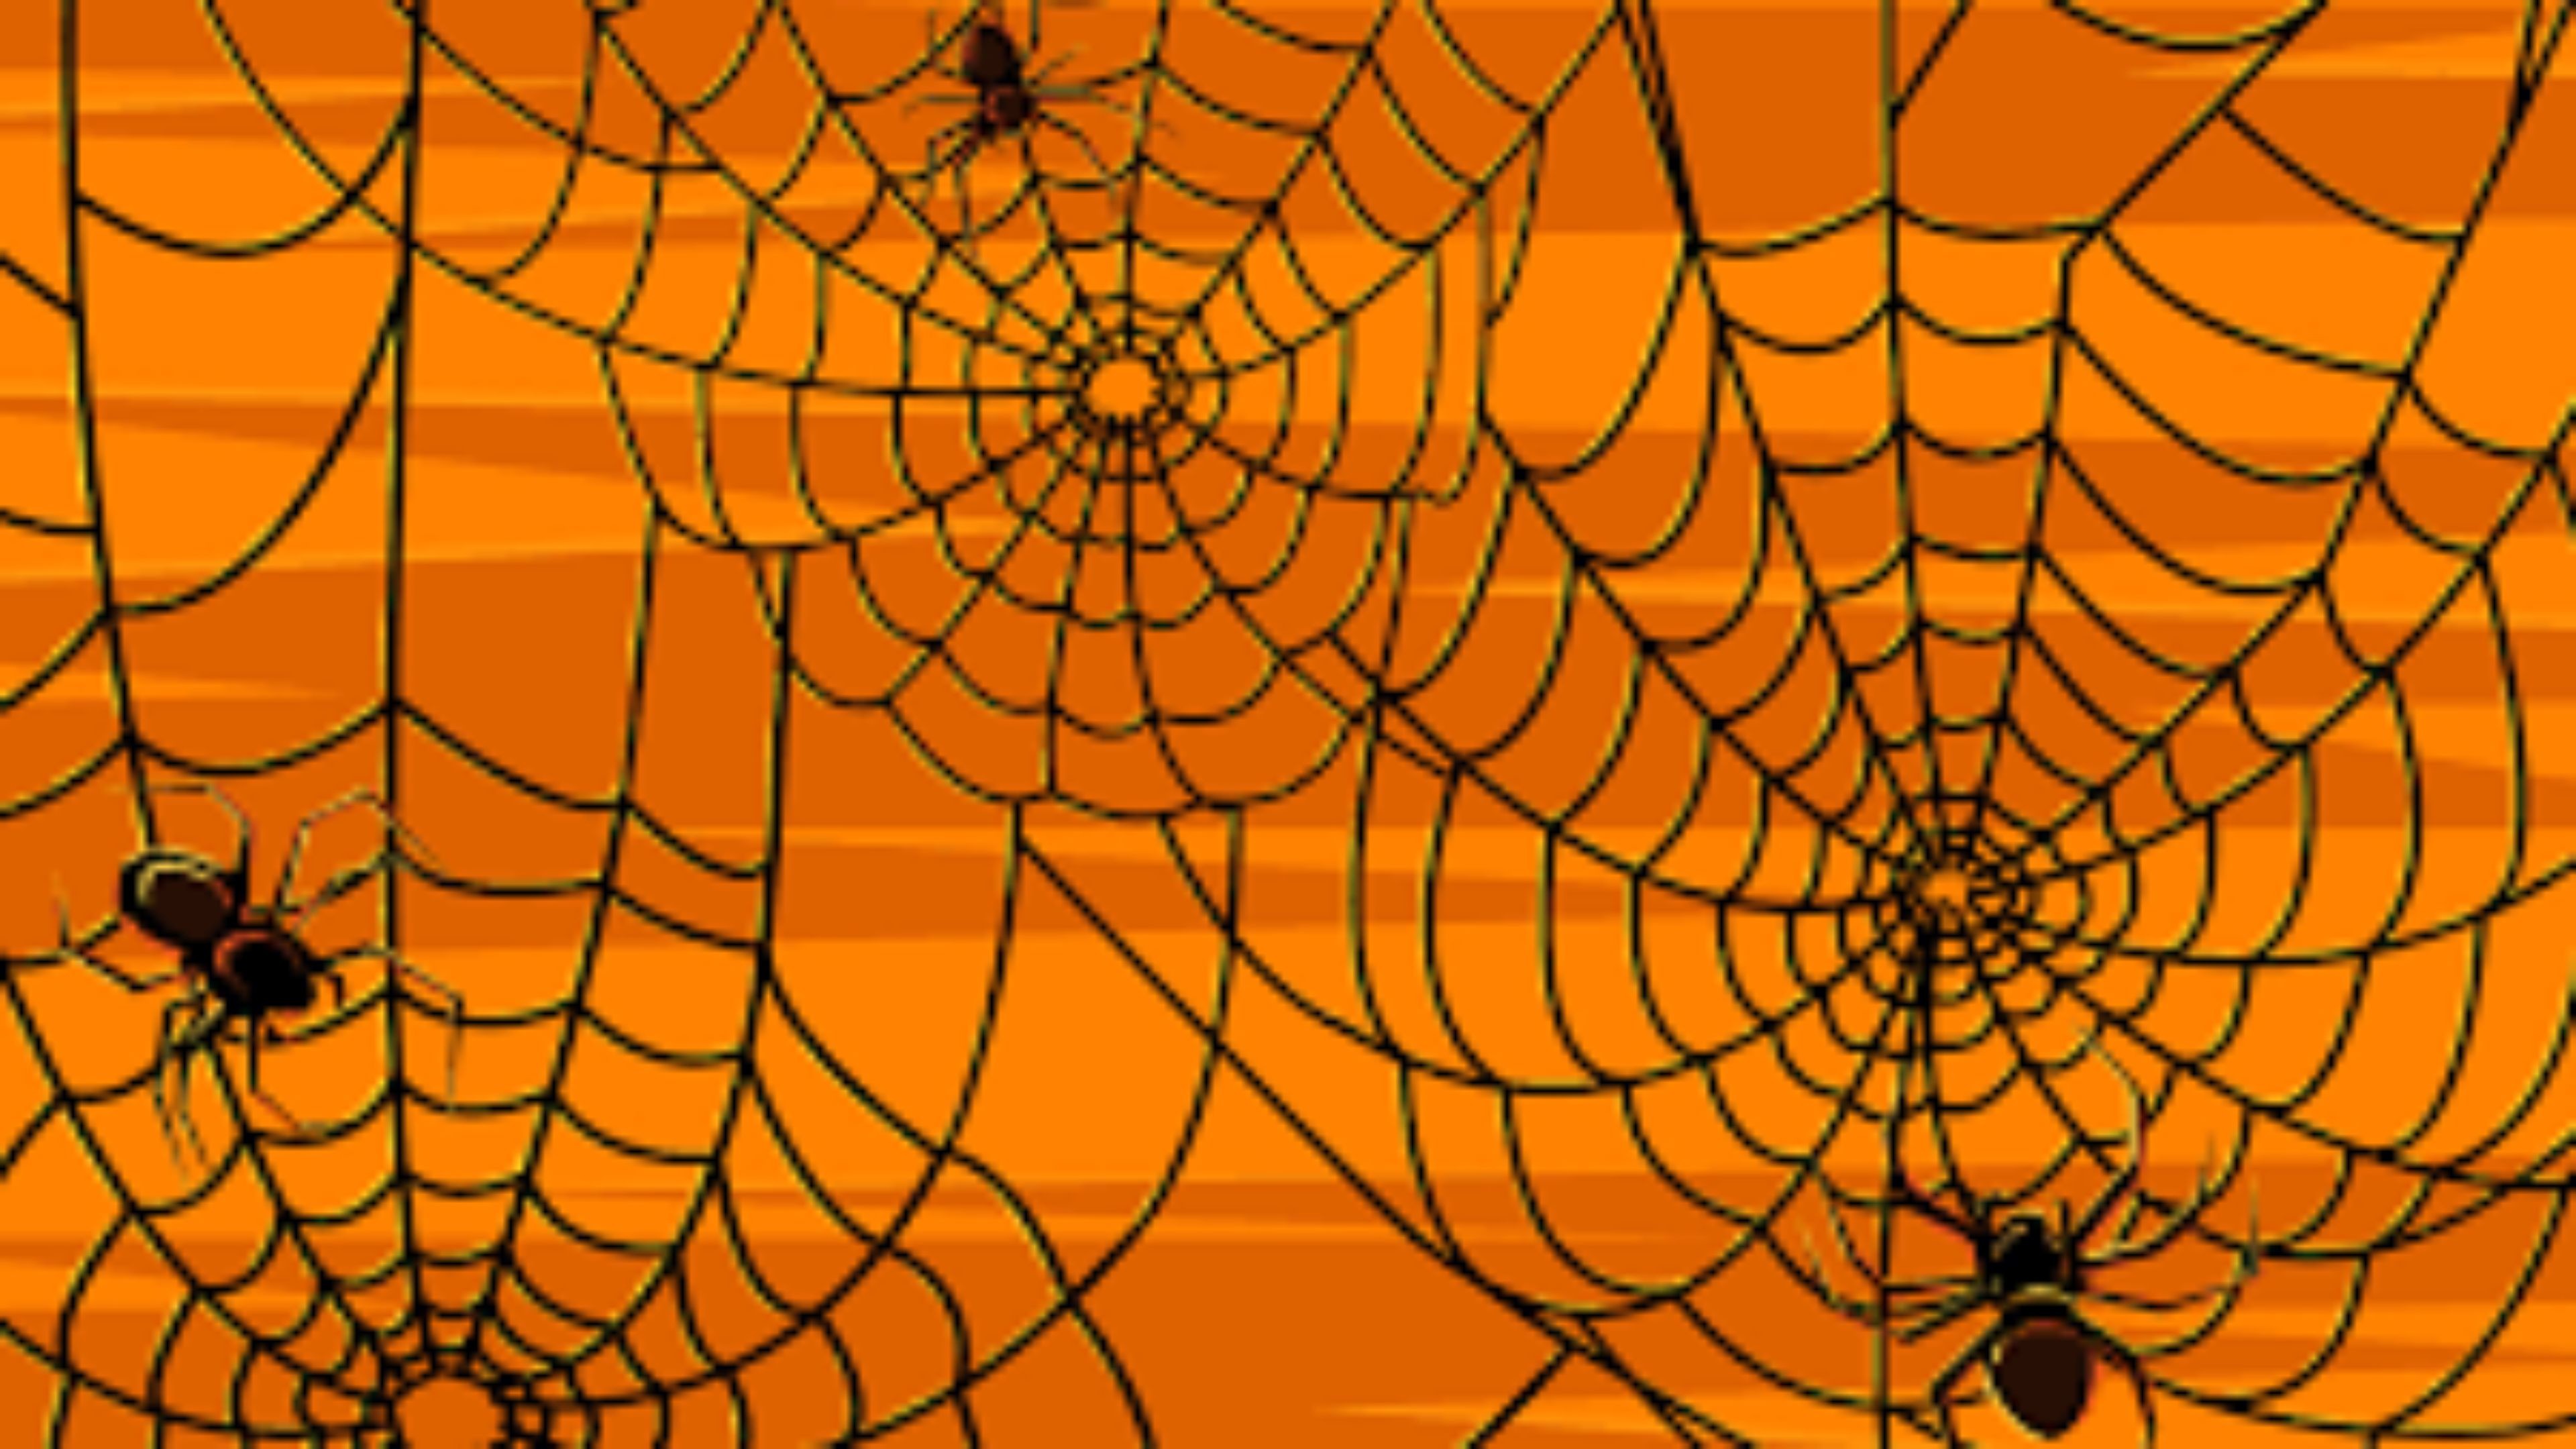 3840x2160 Spider Web 2016 Happy Halloween 4K Wallpaper | Free 4K Wallpaper. Spider  Web 2016 Happy Halloween 4K Wallpaper Free 4K Wallpaper